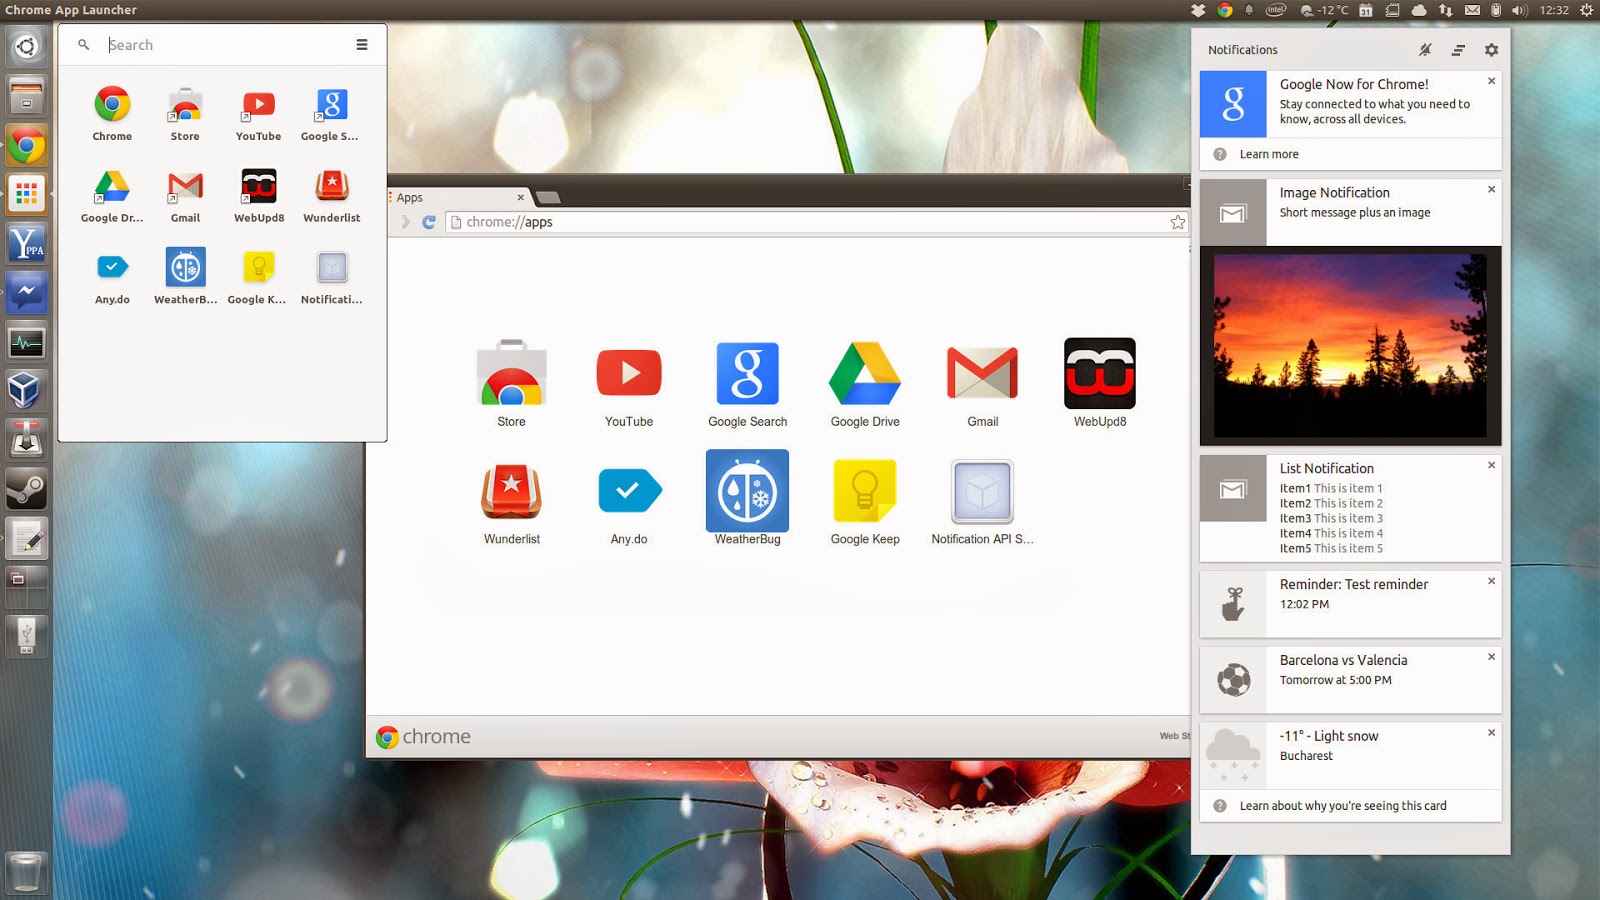 Notification Center Google Now Cards App Launcher Land In Chrome For Linux Dev Channel Web Upd8 Ubuntu Linux Blog